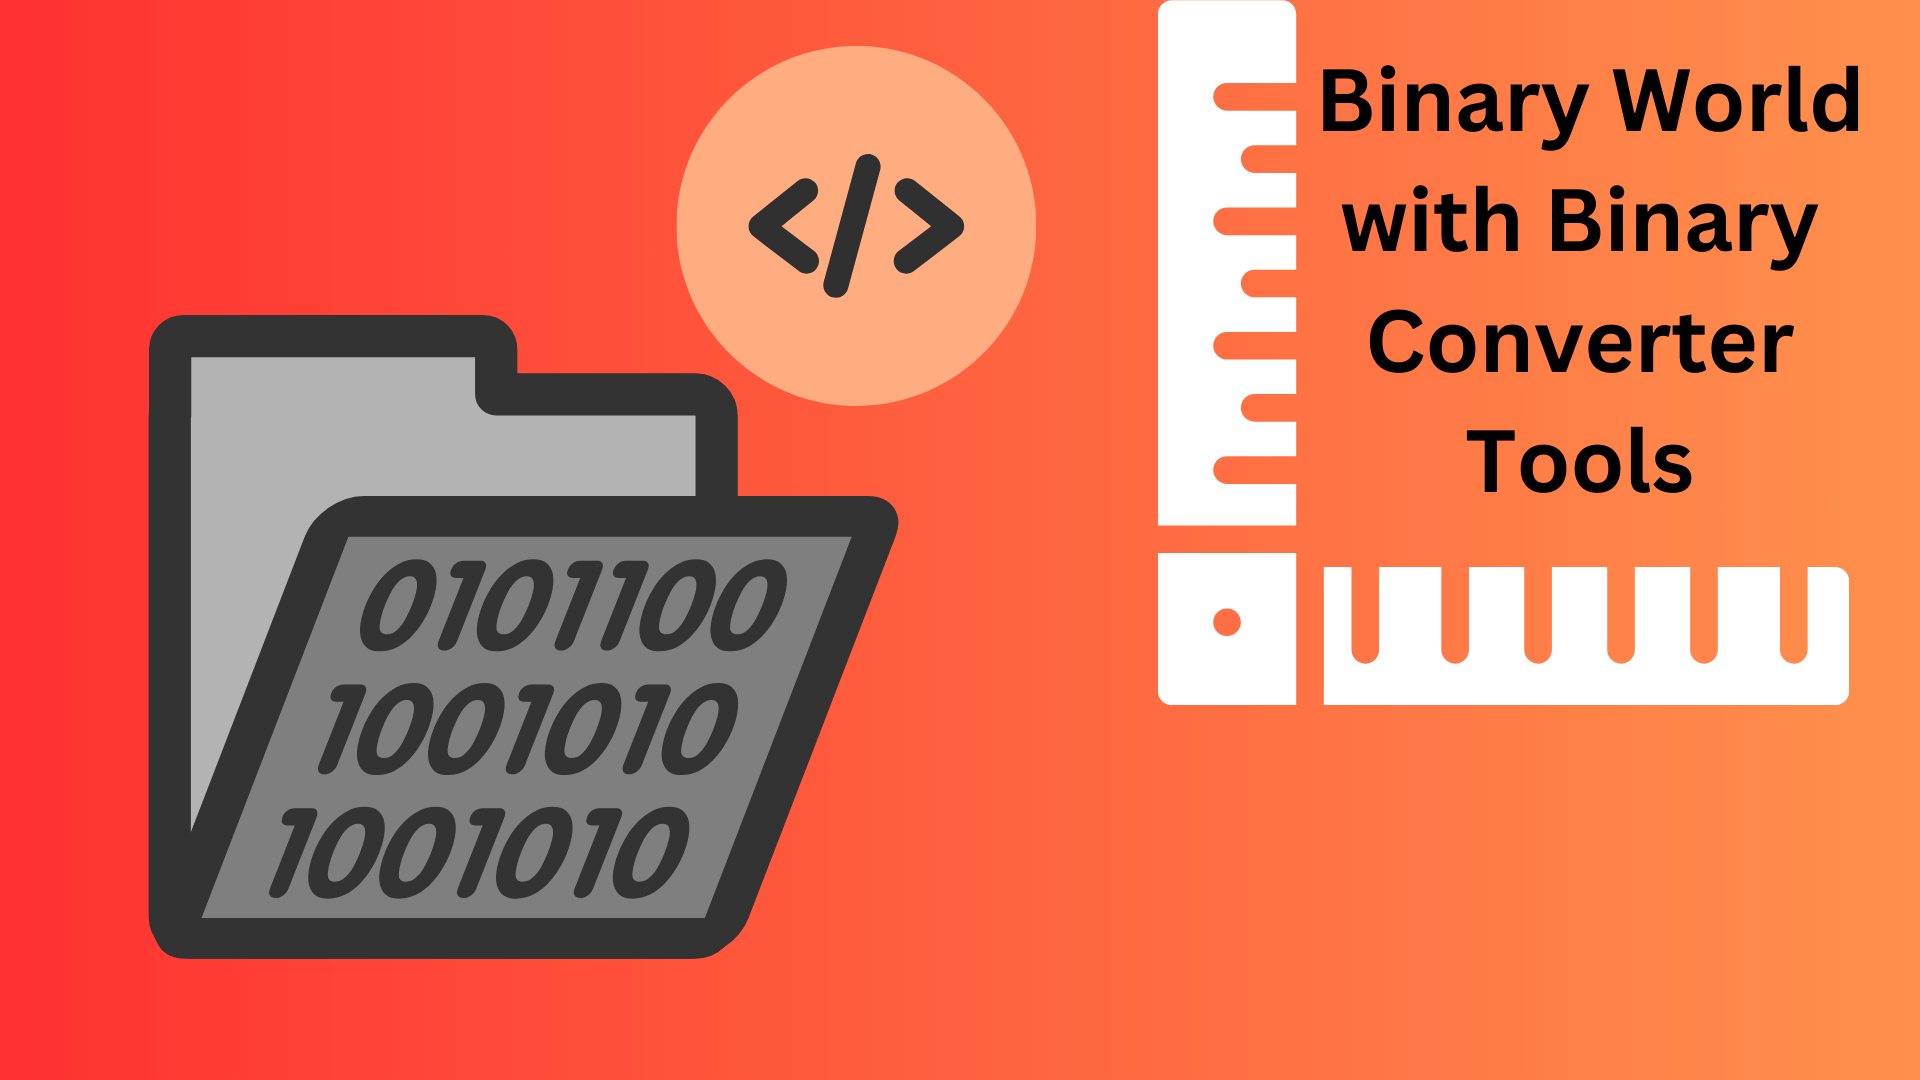  Binary World with Binary Converter Tools